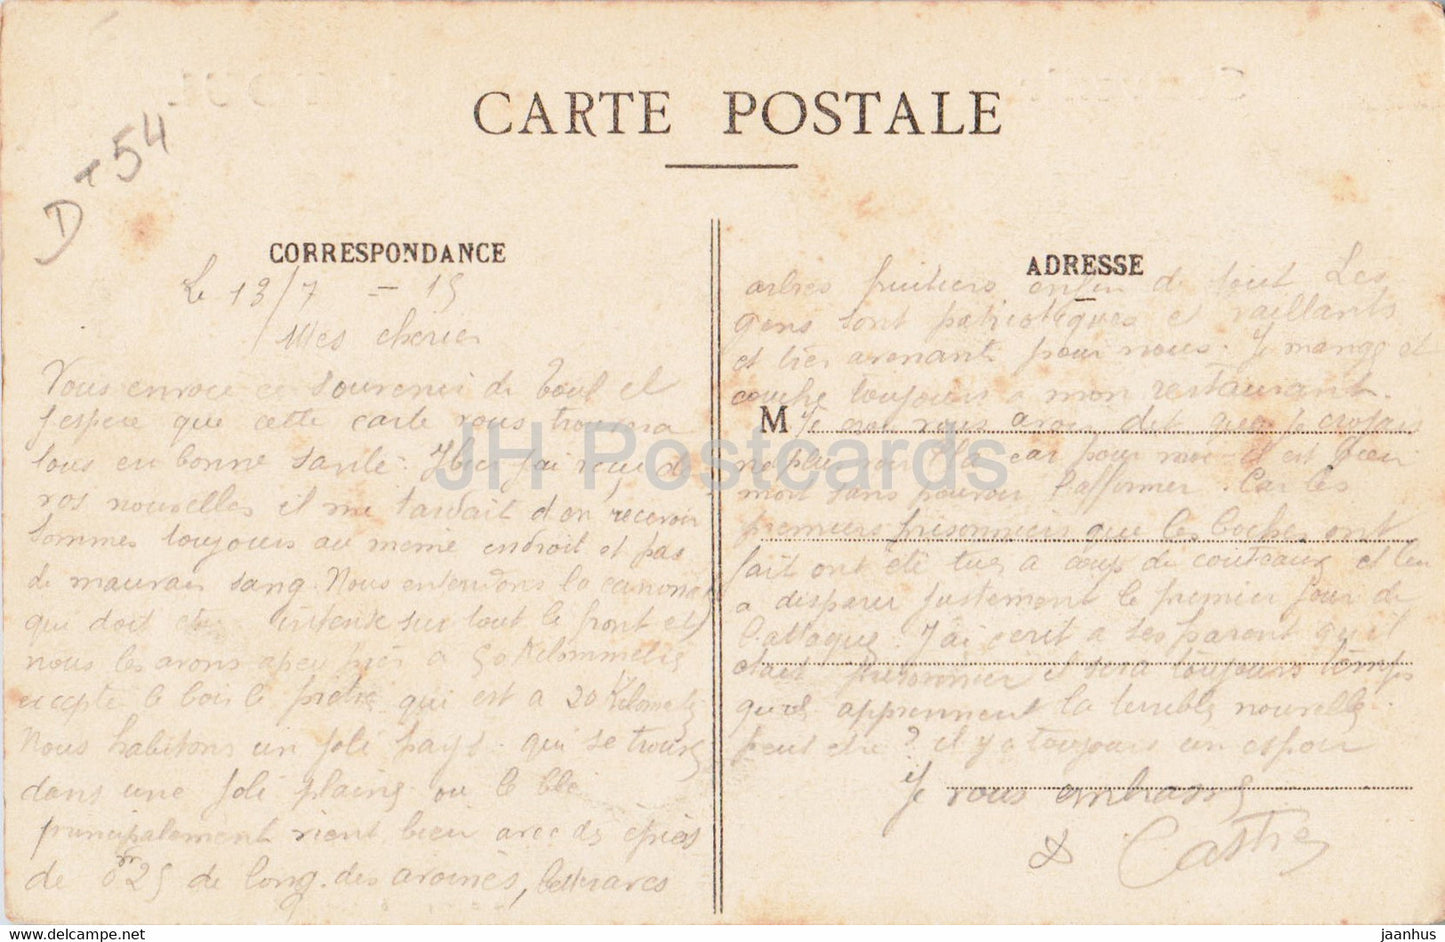 Souvenir de Toul - alte Postkarte - Frankreich - gebraucht